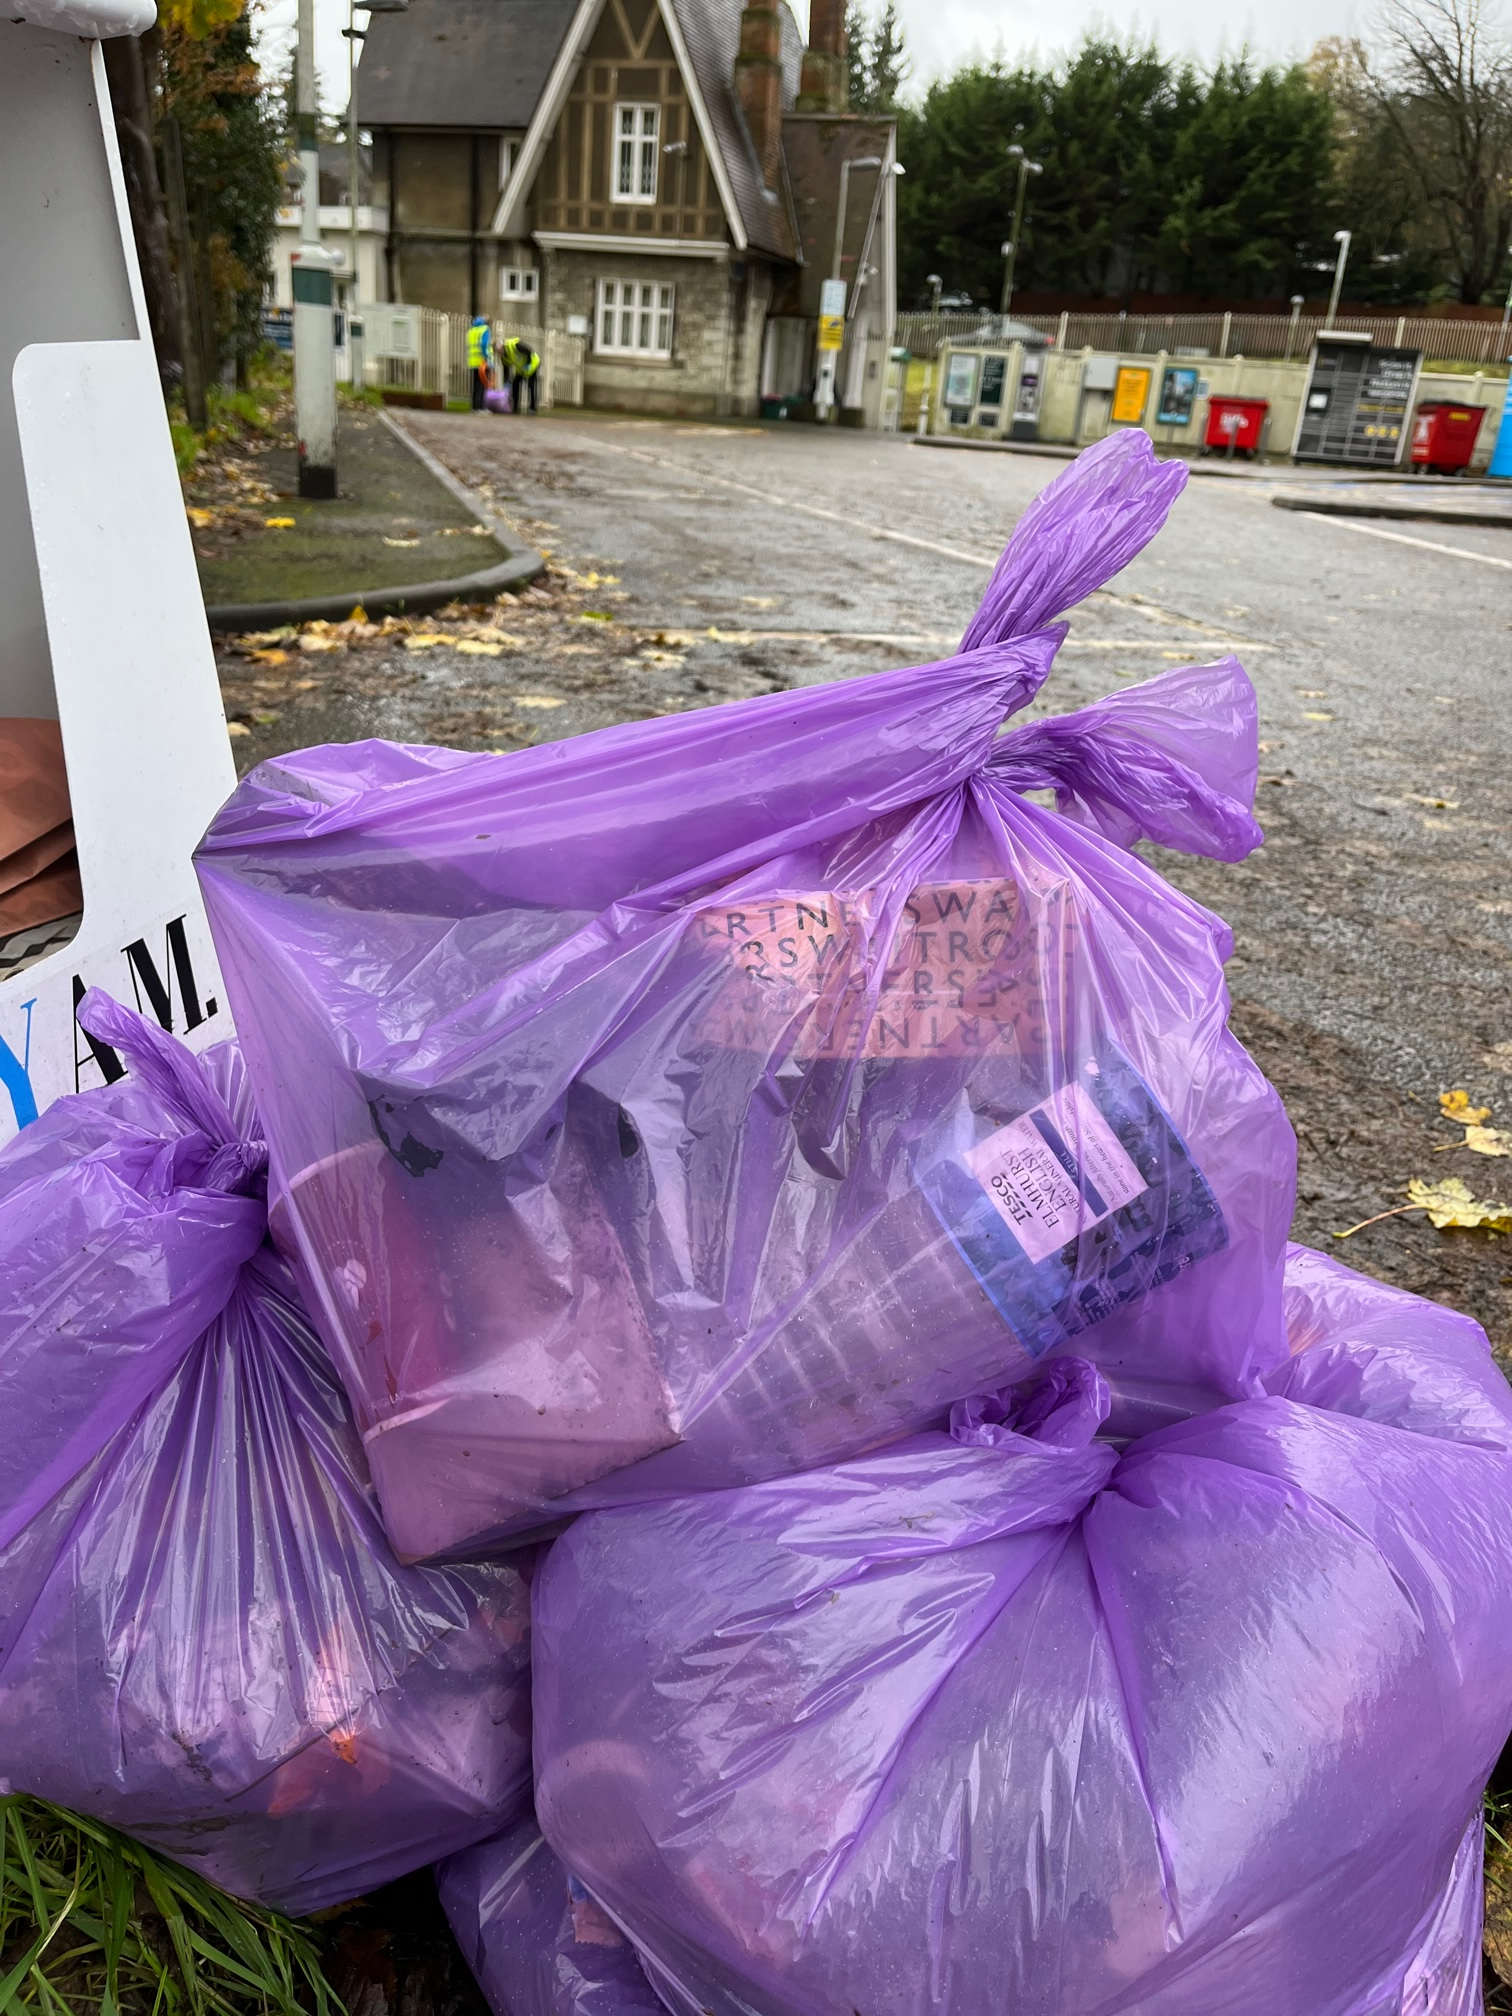 bags of litter in Kenley